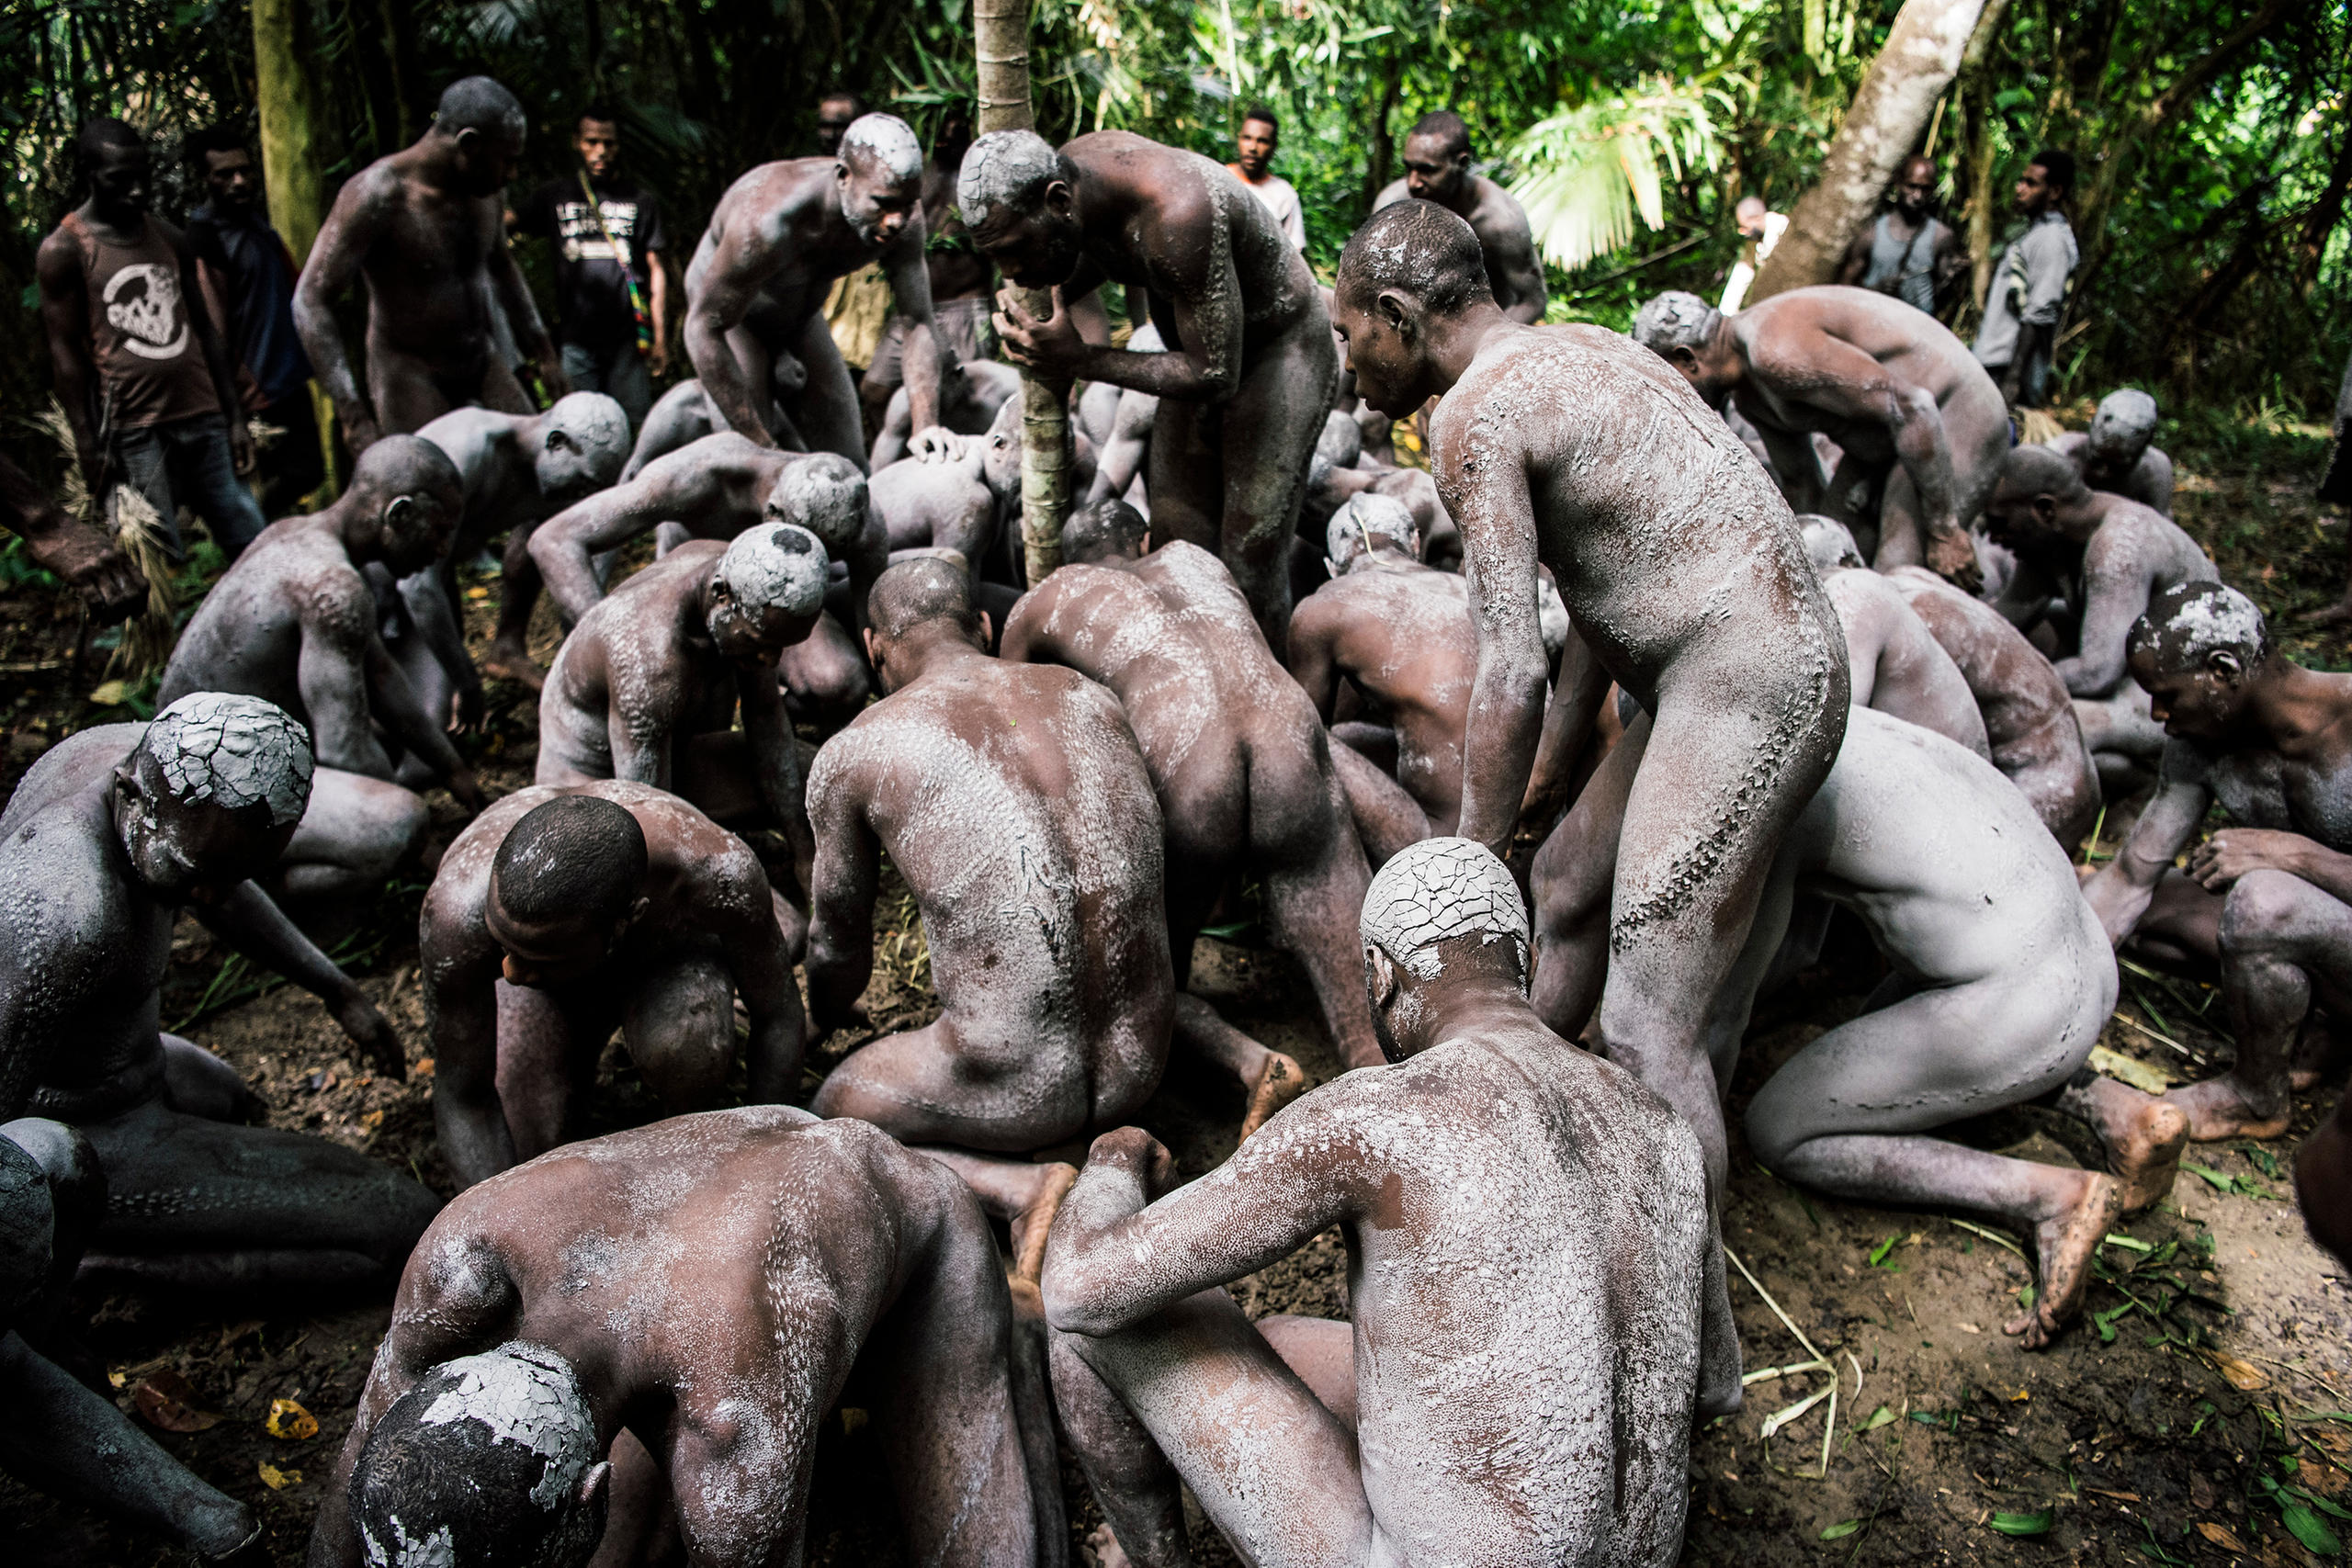 Young men during a crocodile ritual in Papua New Guinea